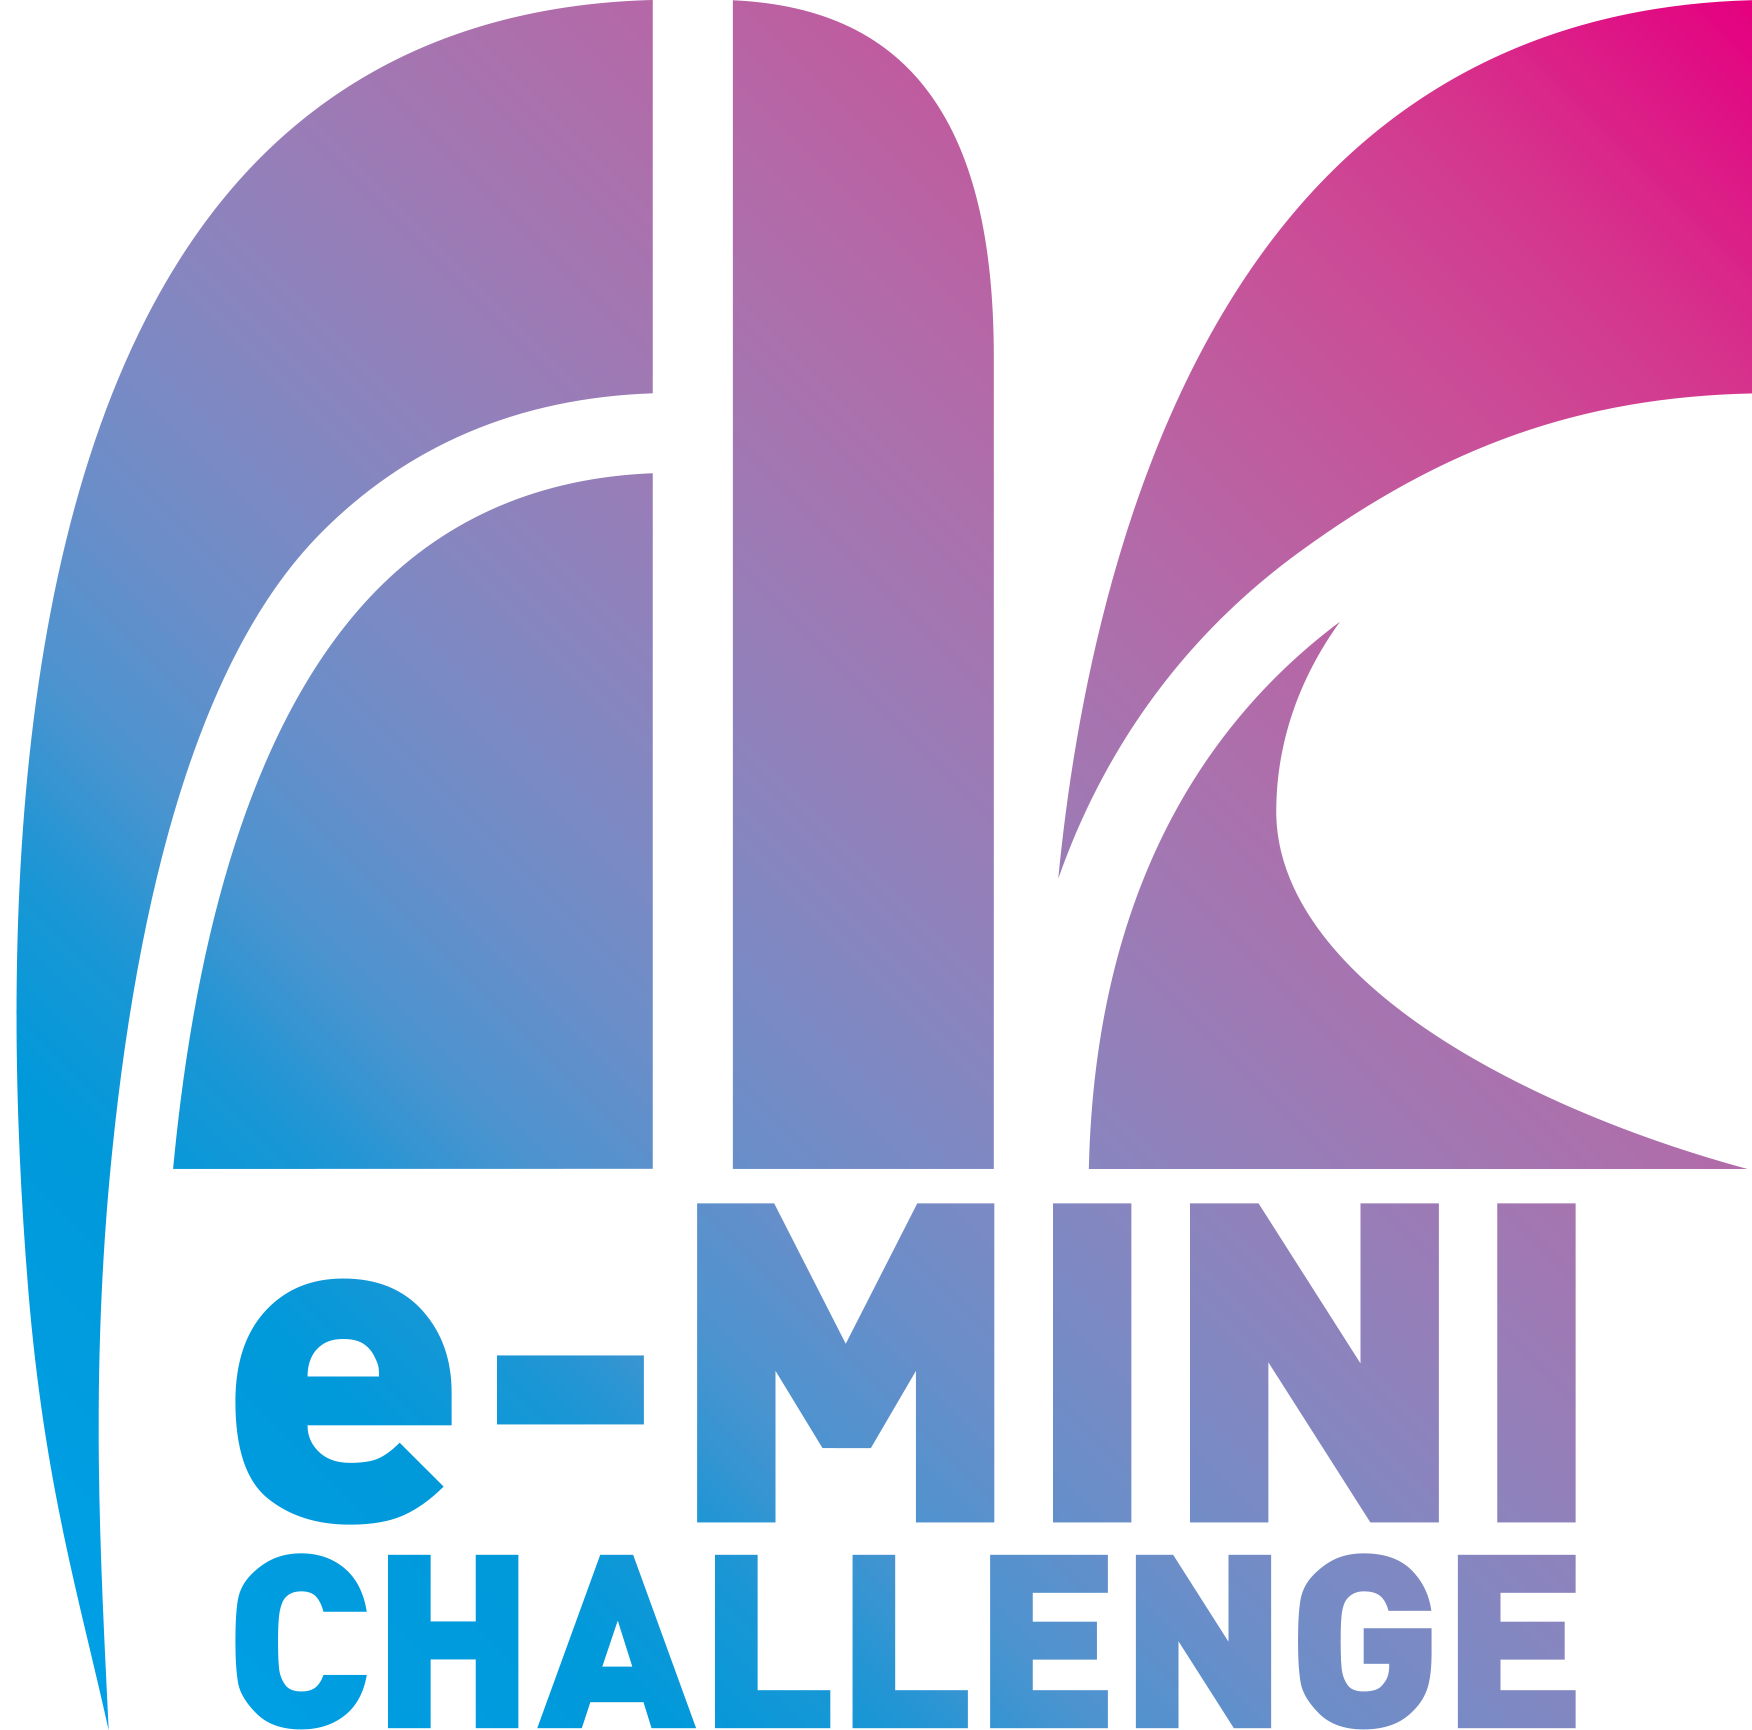 e-MINI CHALLENGE® 2020 S2 Rd.3 ポイントランキング更新